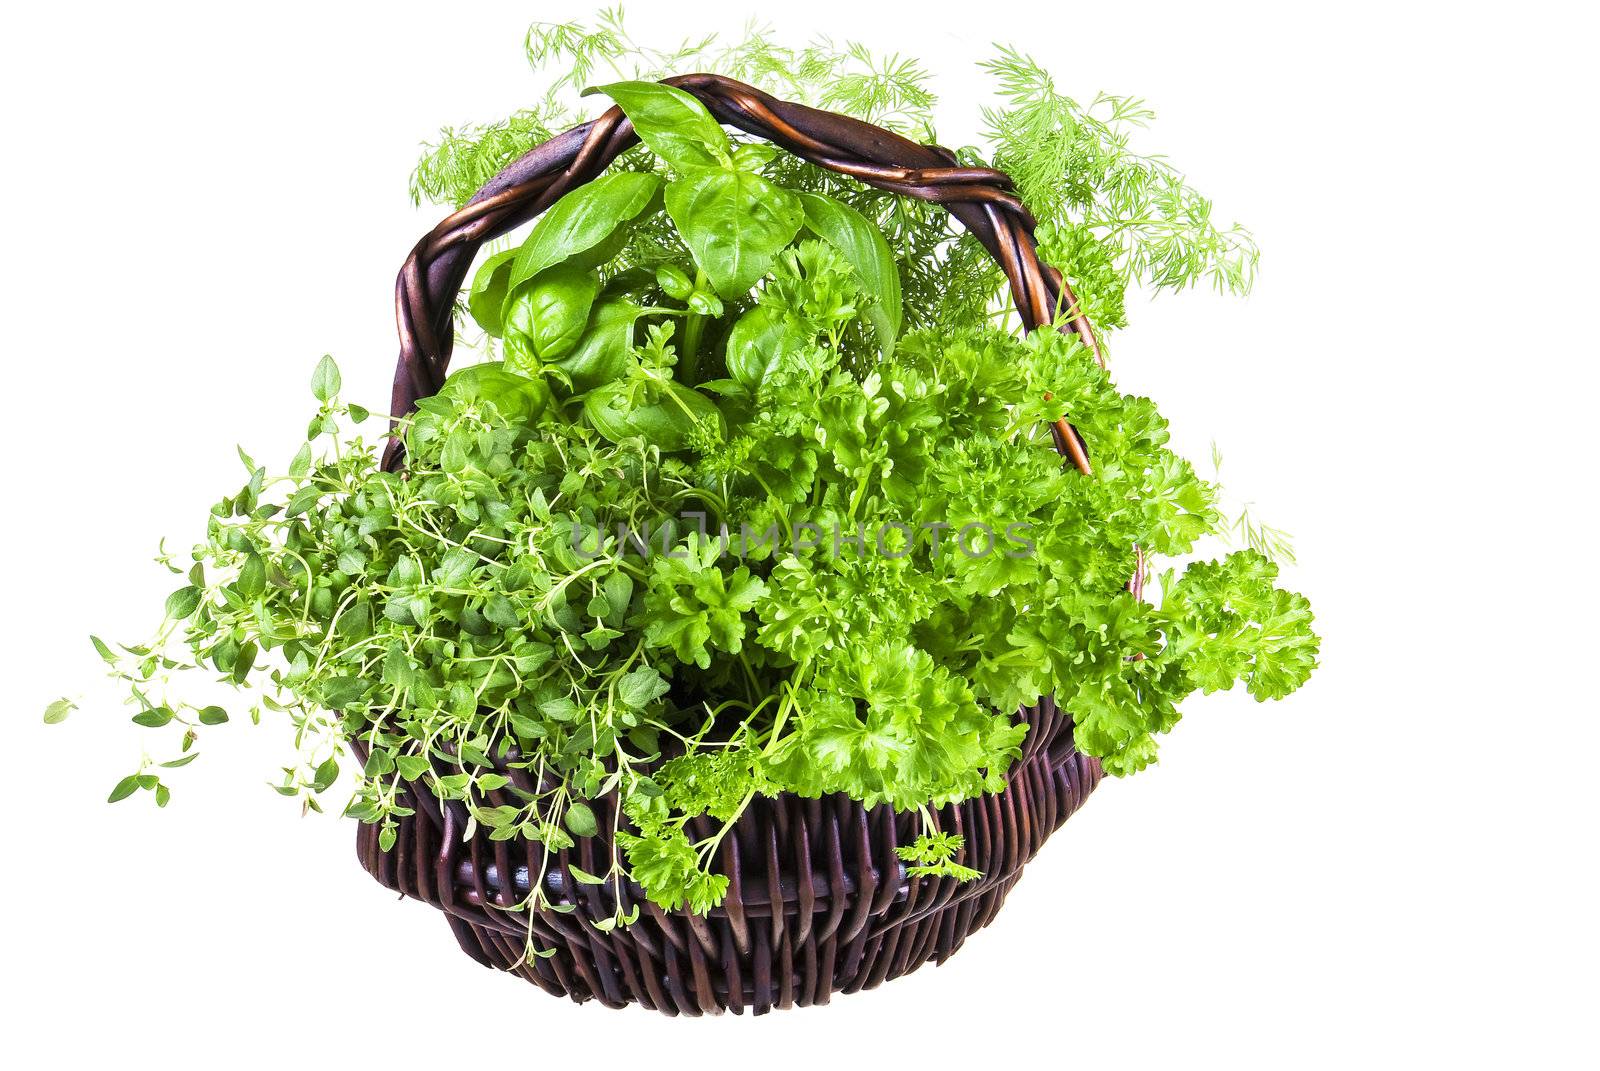 Basket of herbs by caldix